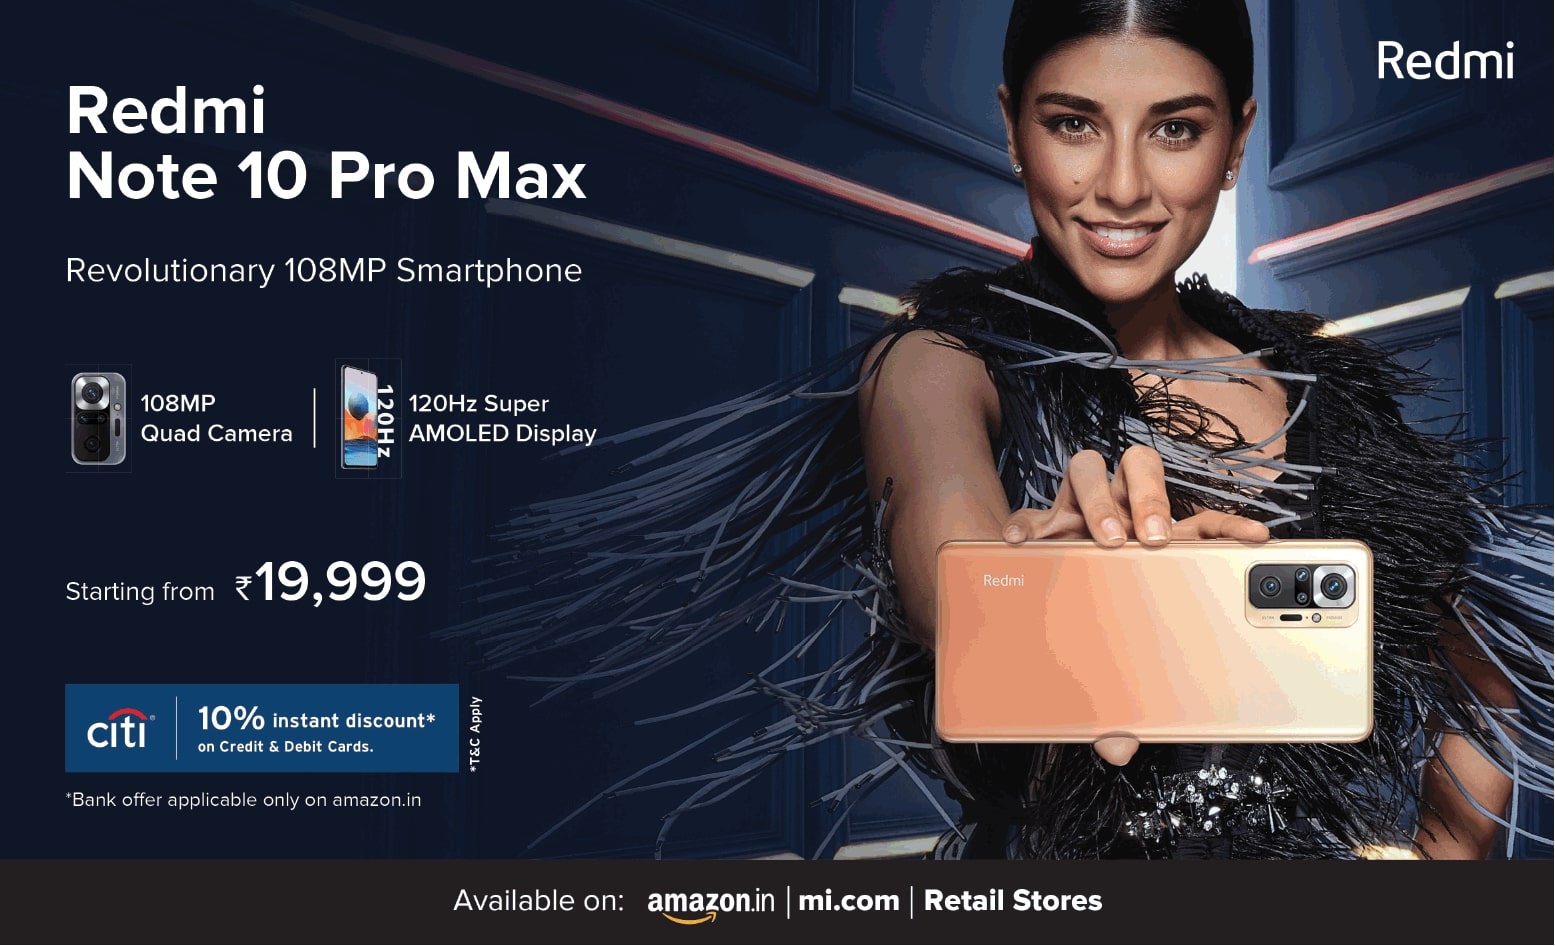 redmi-note-10-pro-max-revolutionary-108mp-smartphone-ad-times-of-india-mumbai-25-05-2021